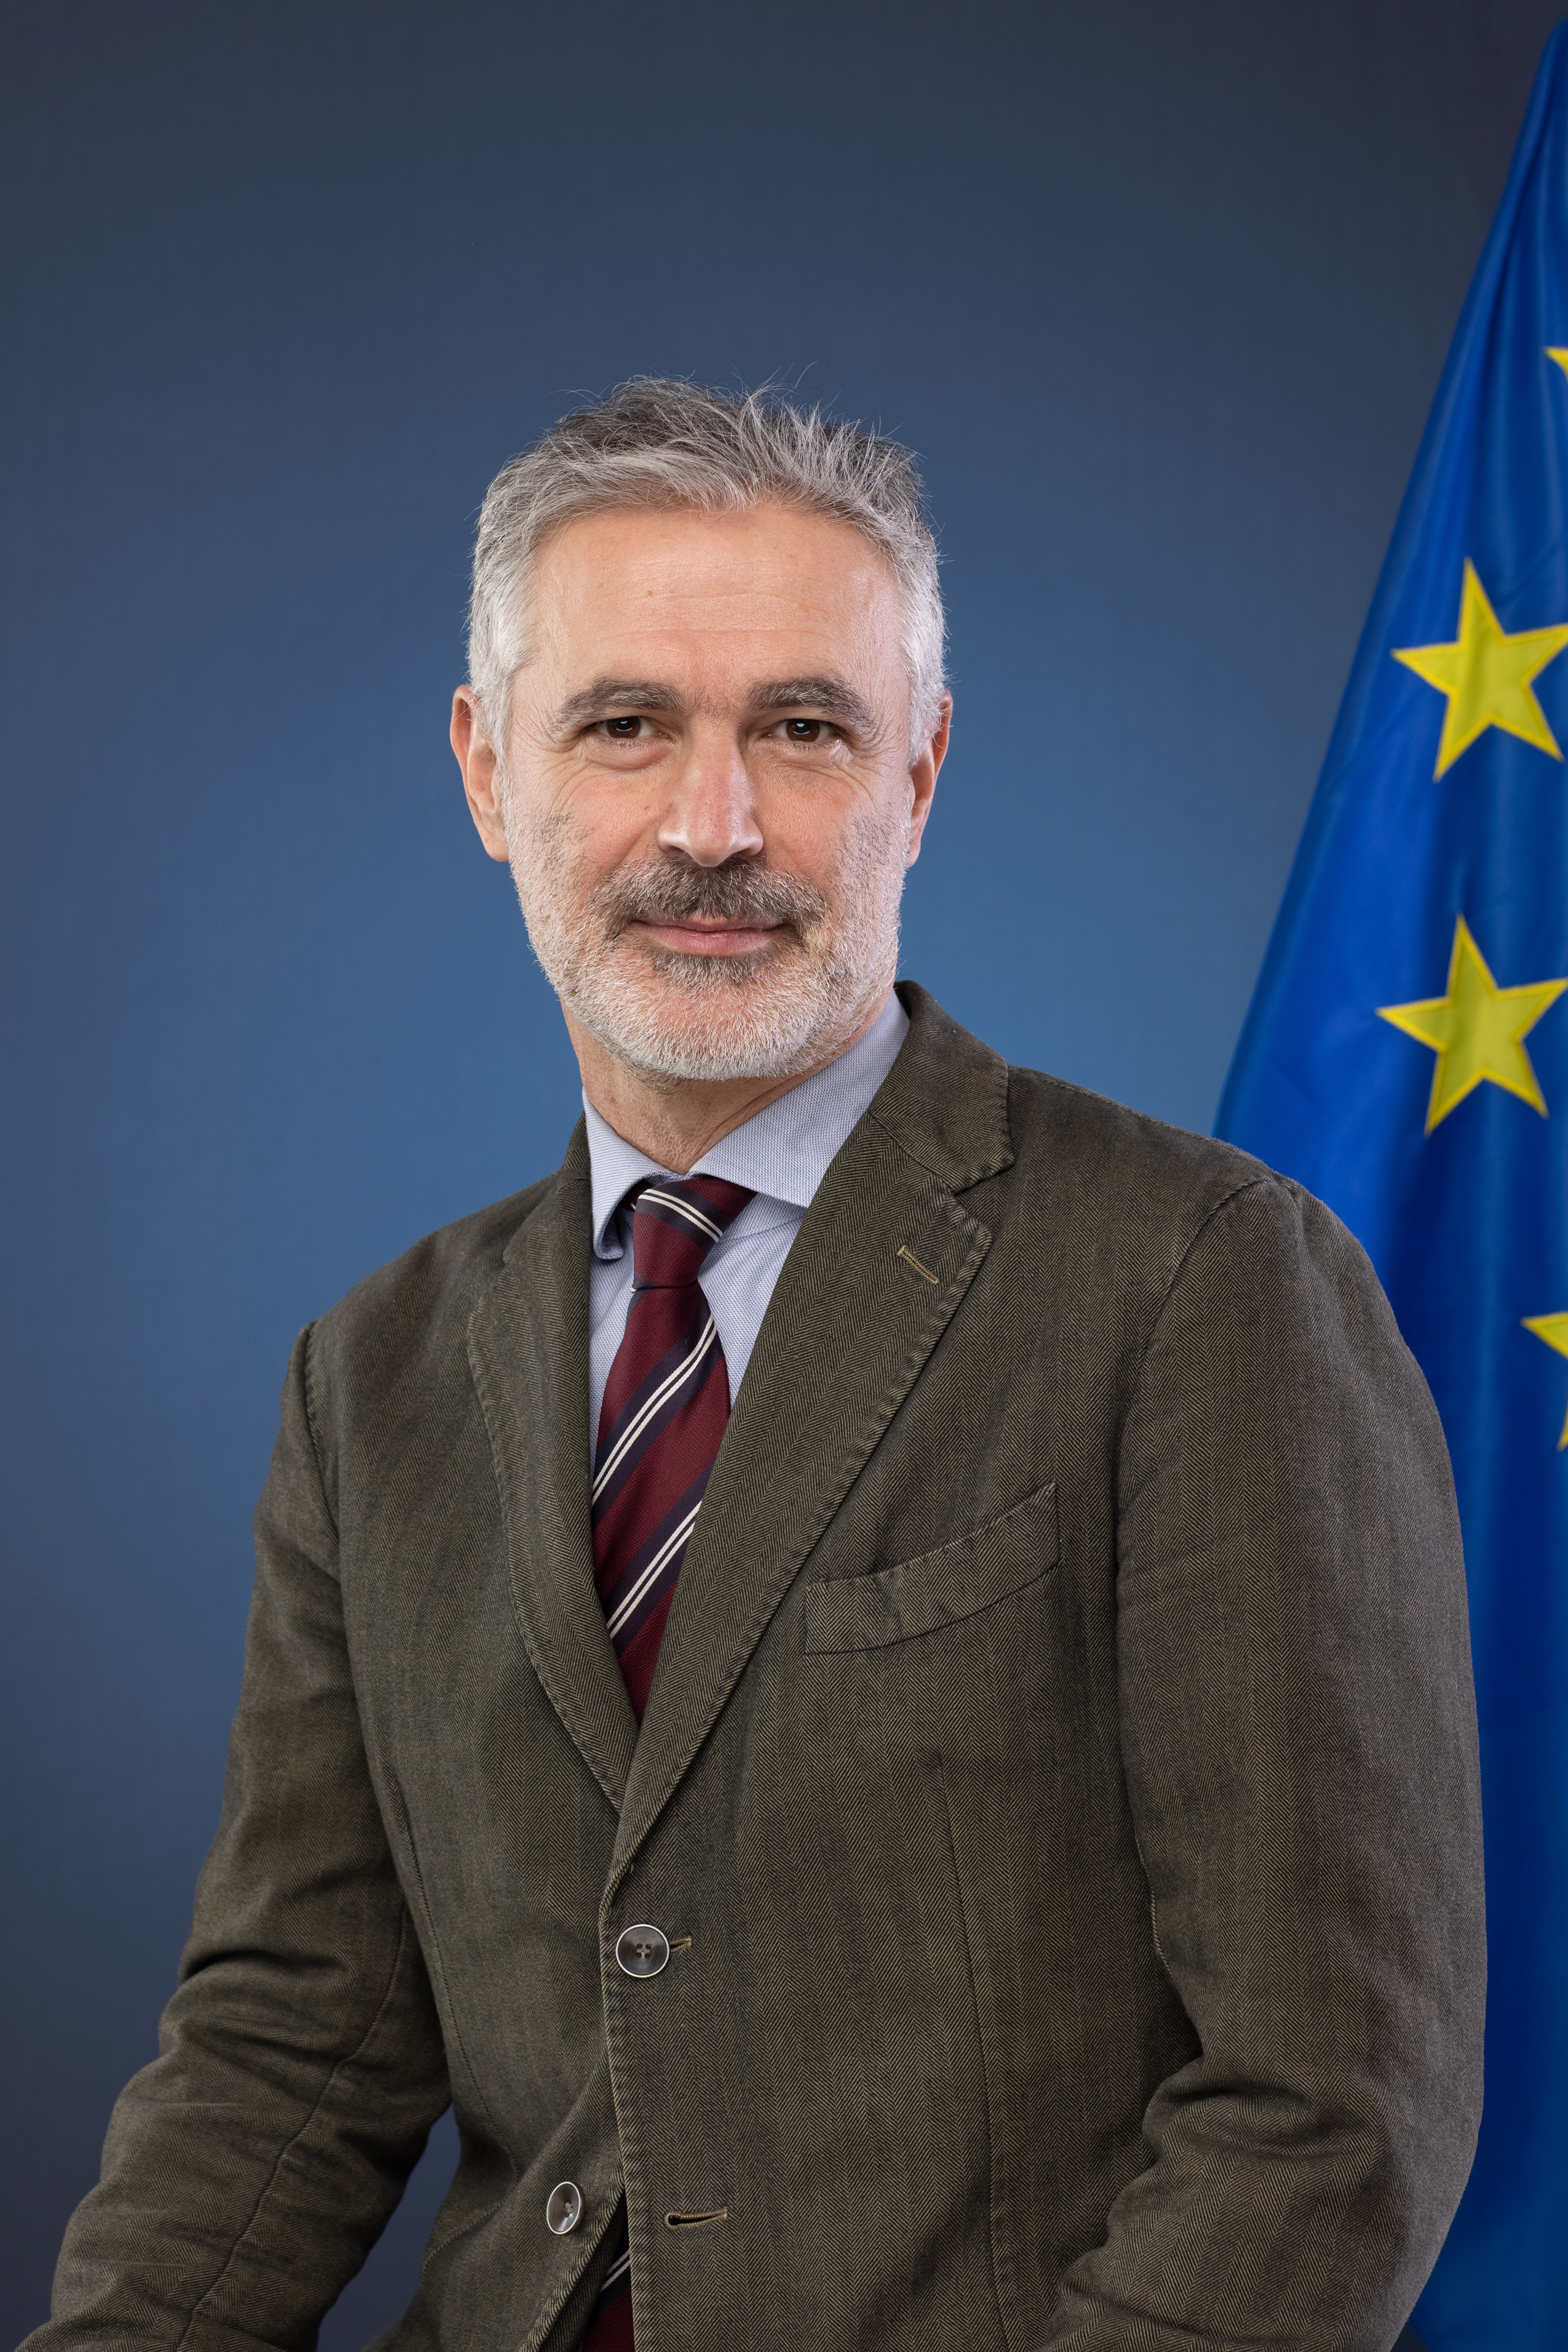 Photograph of European Prosecutor for Italy Danilo Ceccarelli